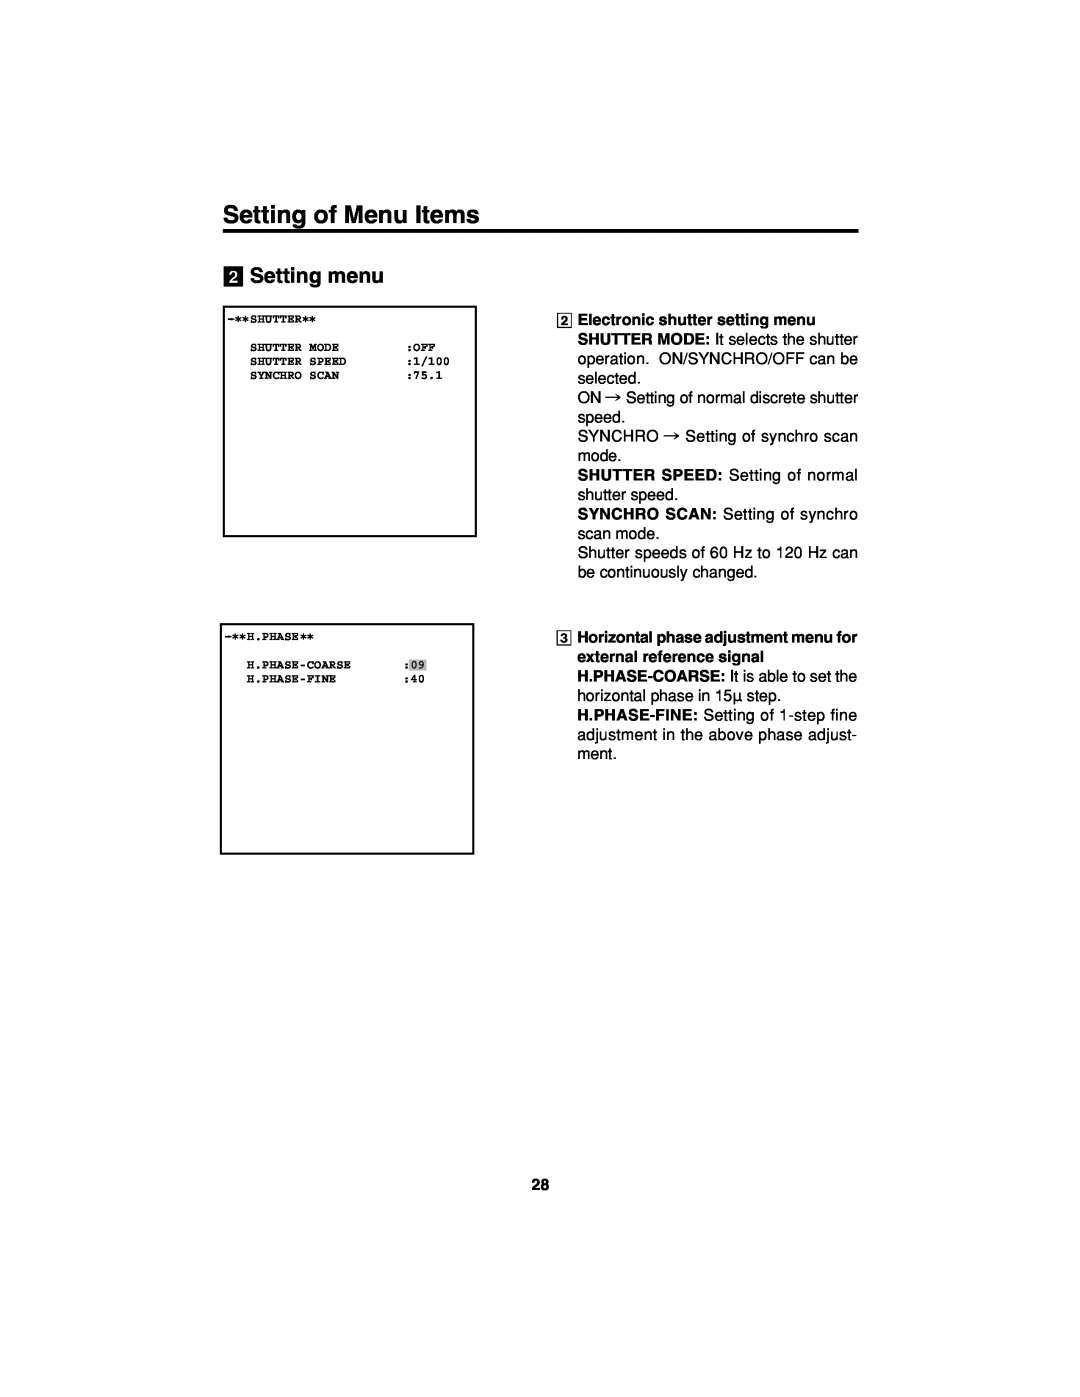 Panasonic AK-HC900 manual Electronic shutter setting menu, Setting of Menu Items, @ Setting menu 